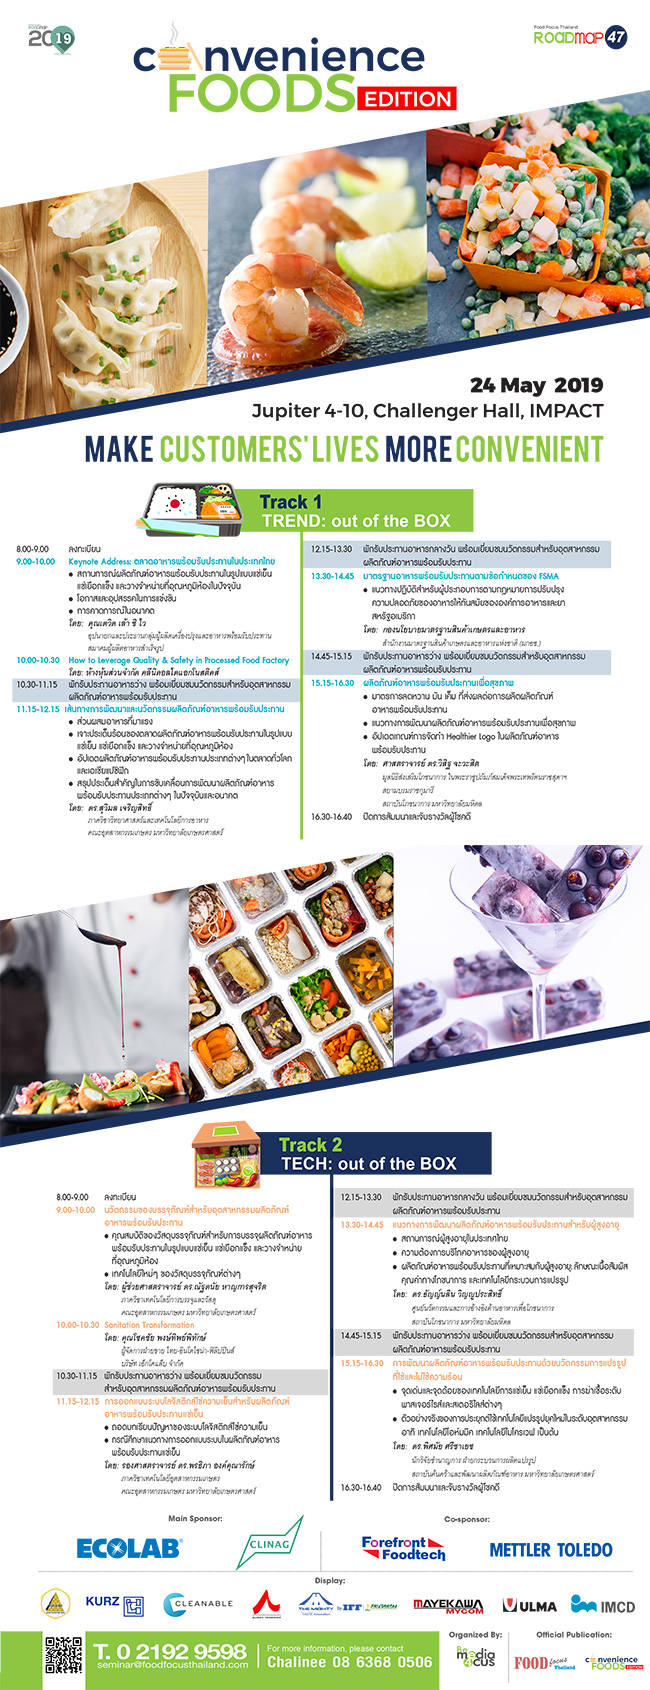 Food Focus Thailand Roadmap 47 #Convenience Foods Edition